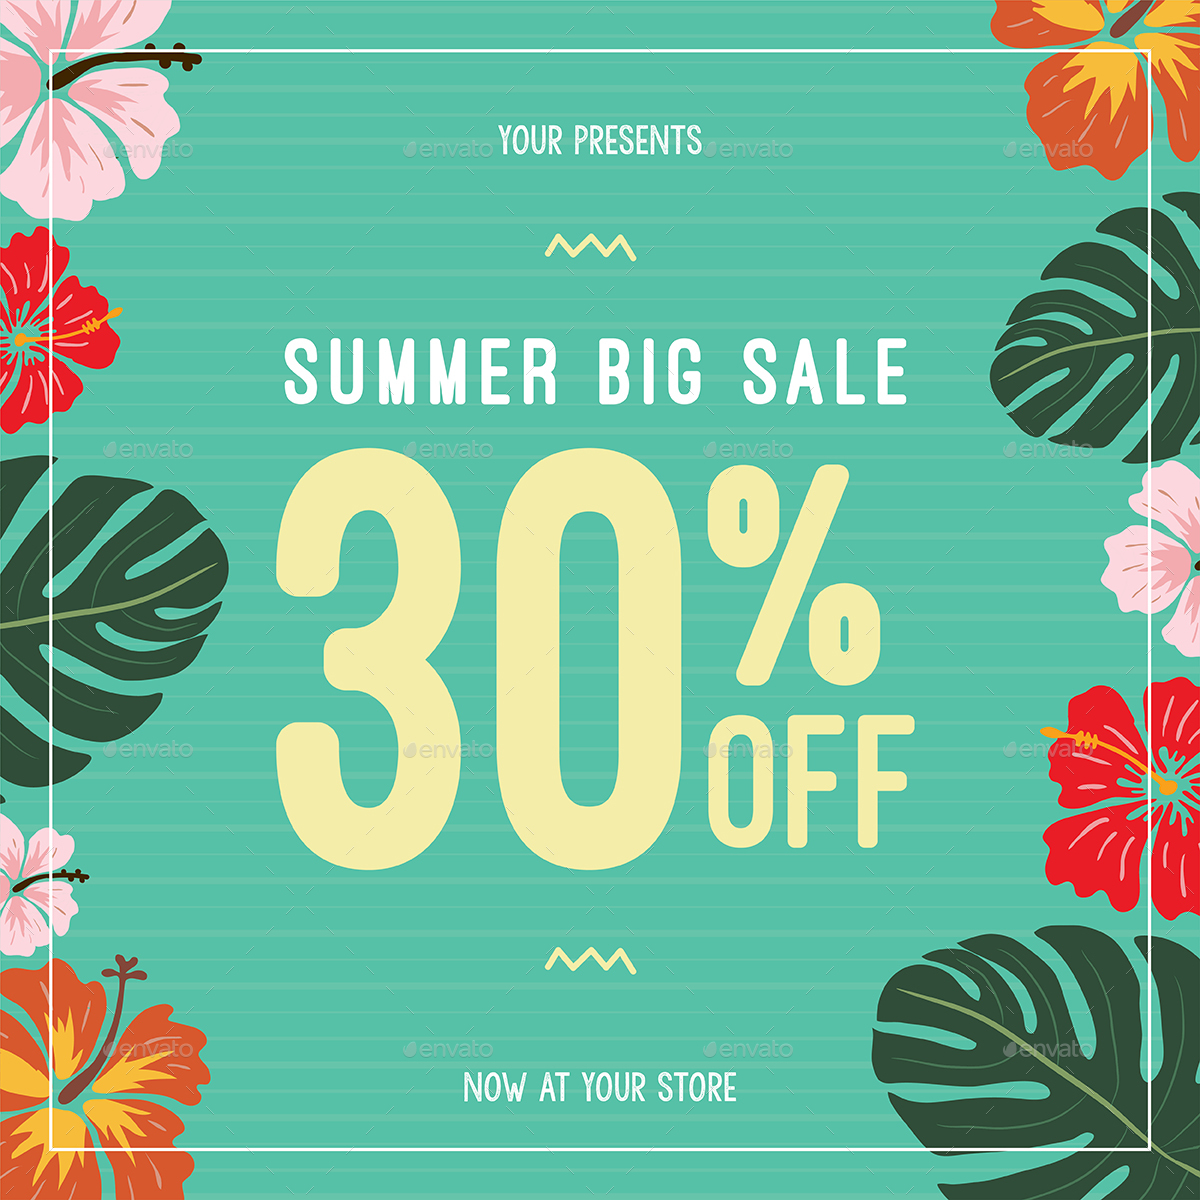 Summer Sale Flyer + Instagram Post, Print Templates | GraphicRiver